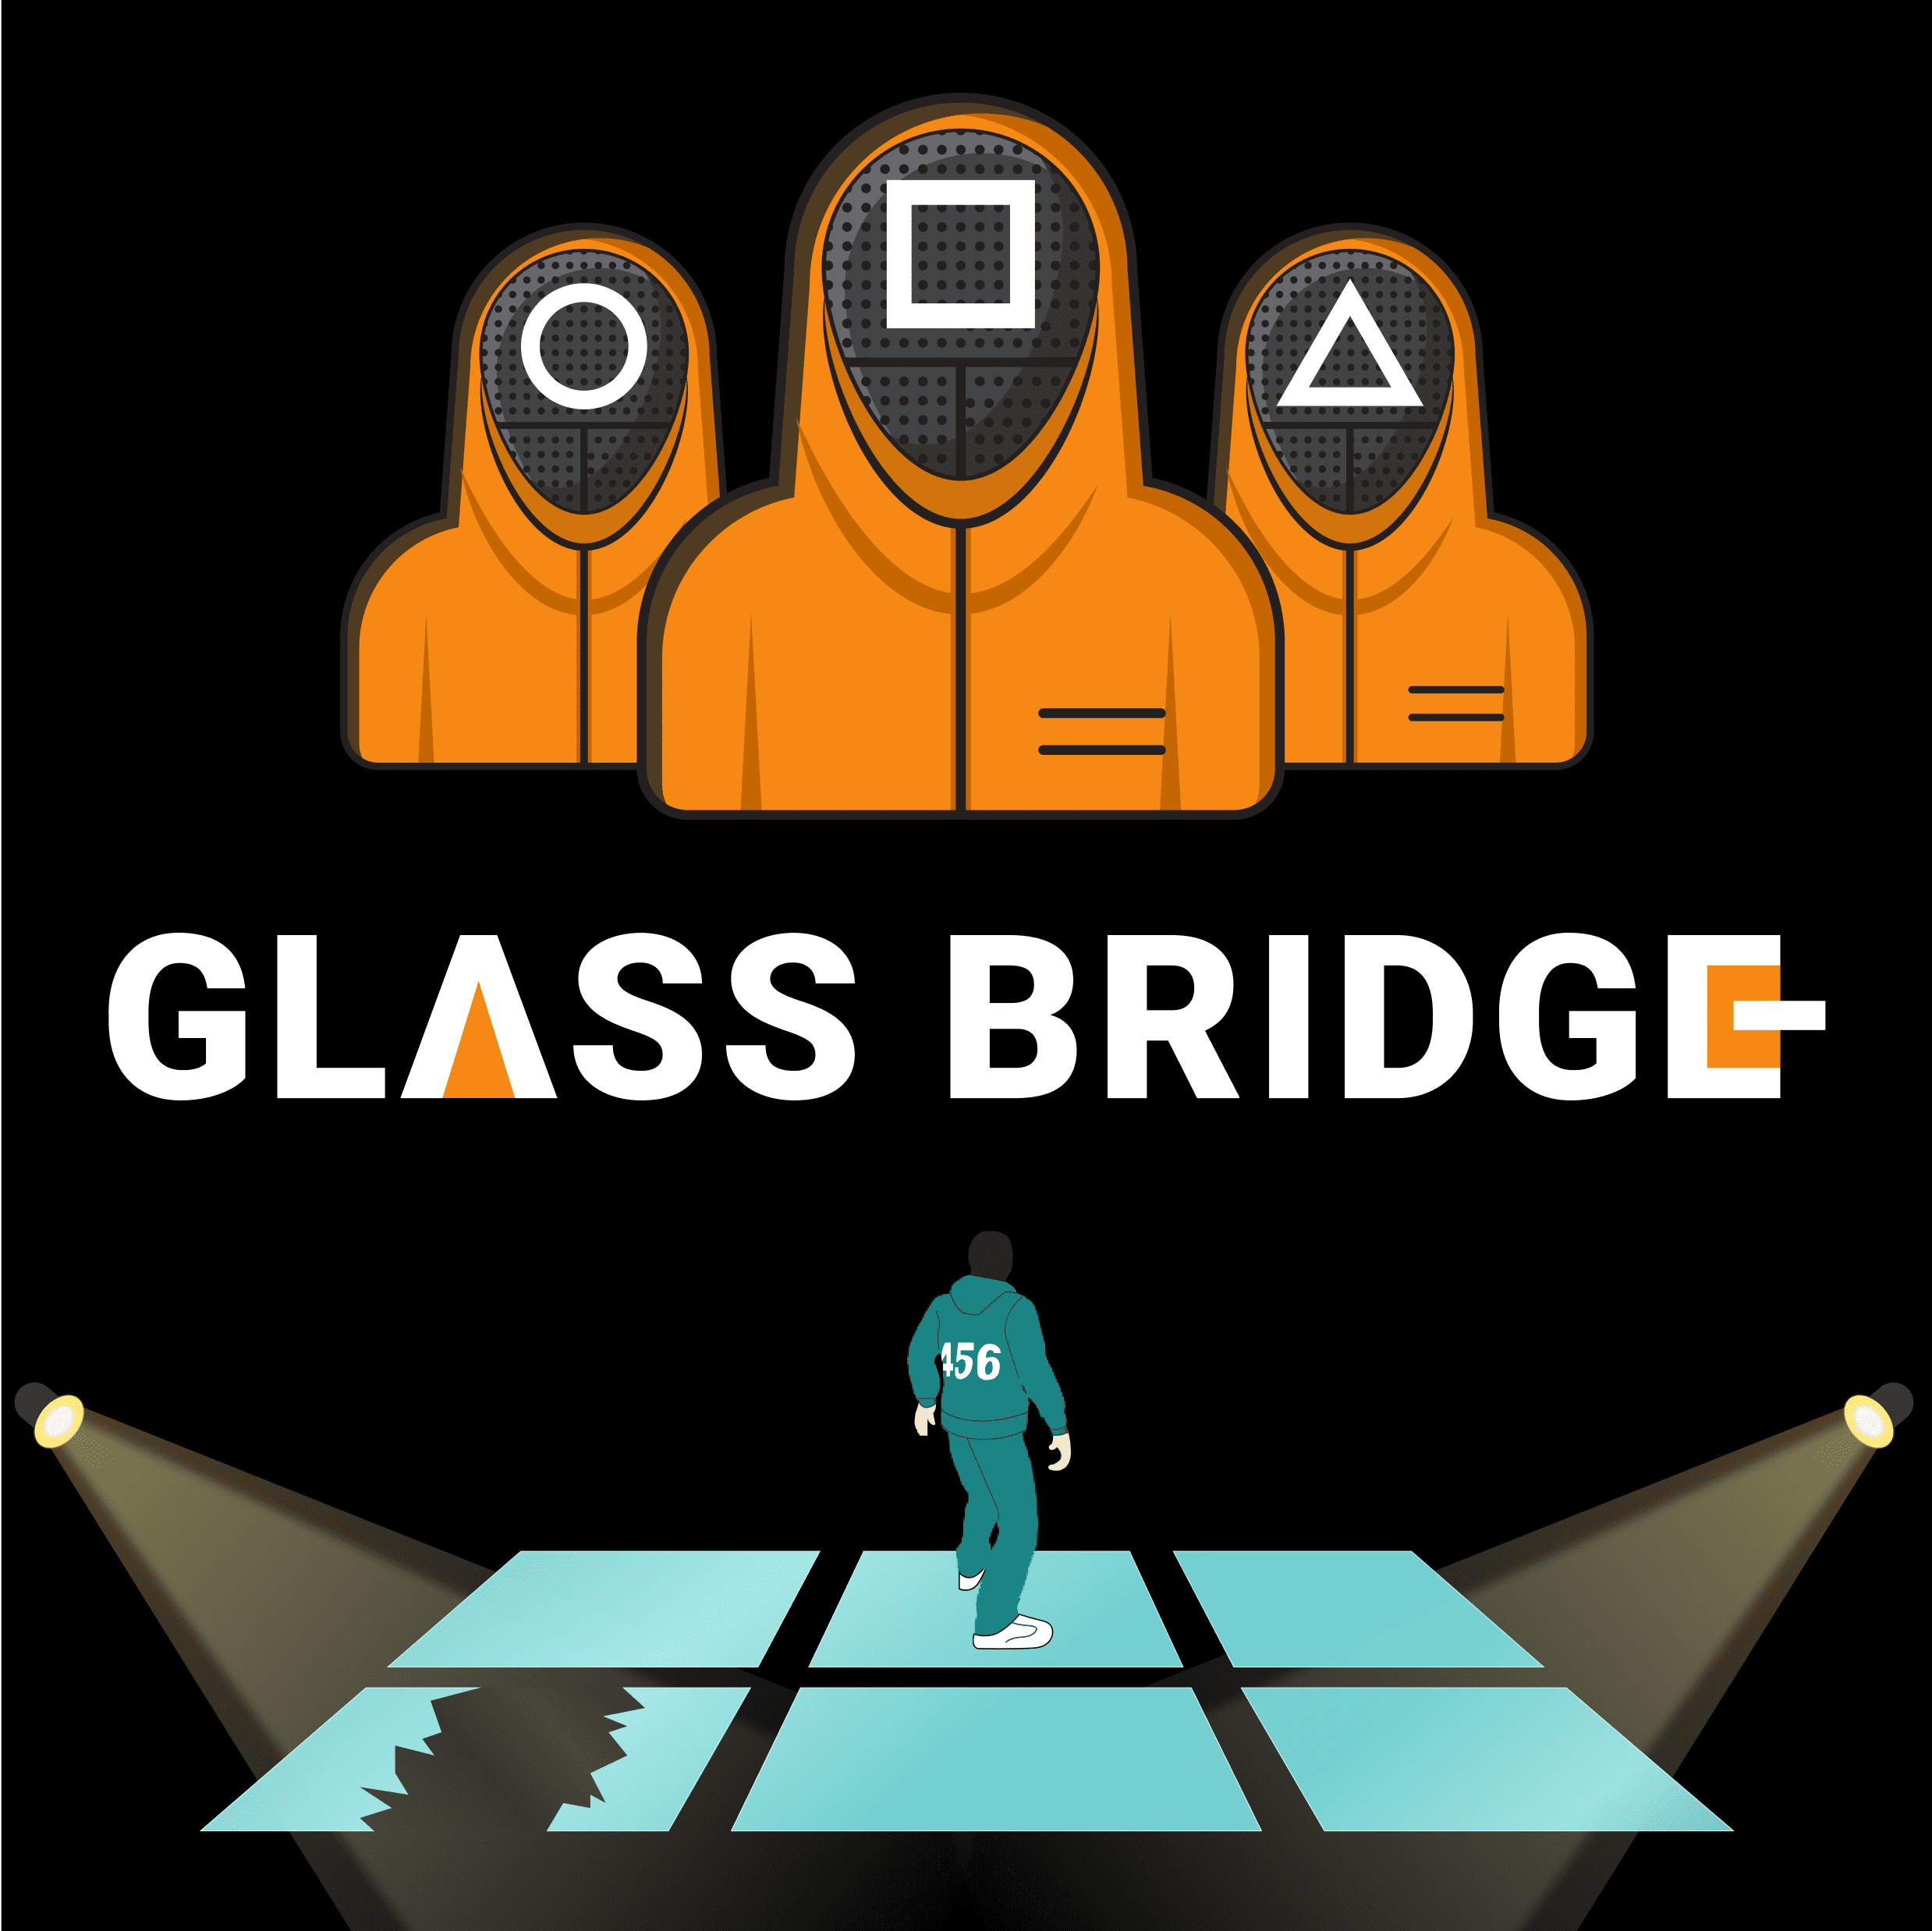 Glass bridge